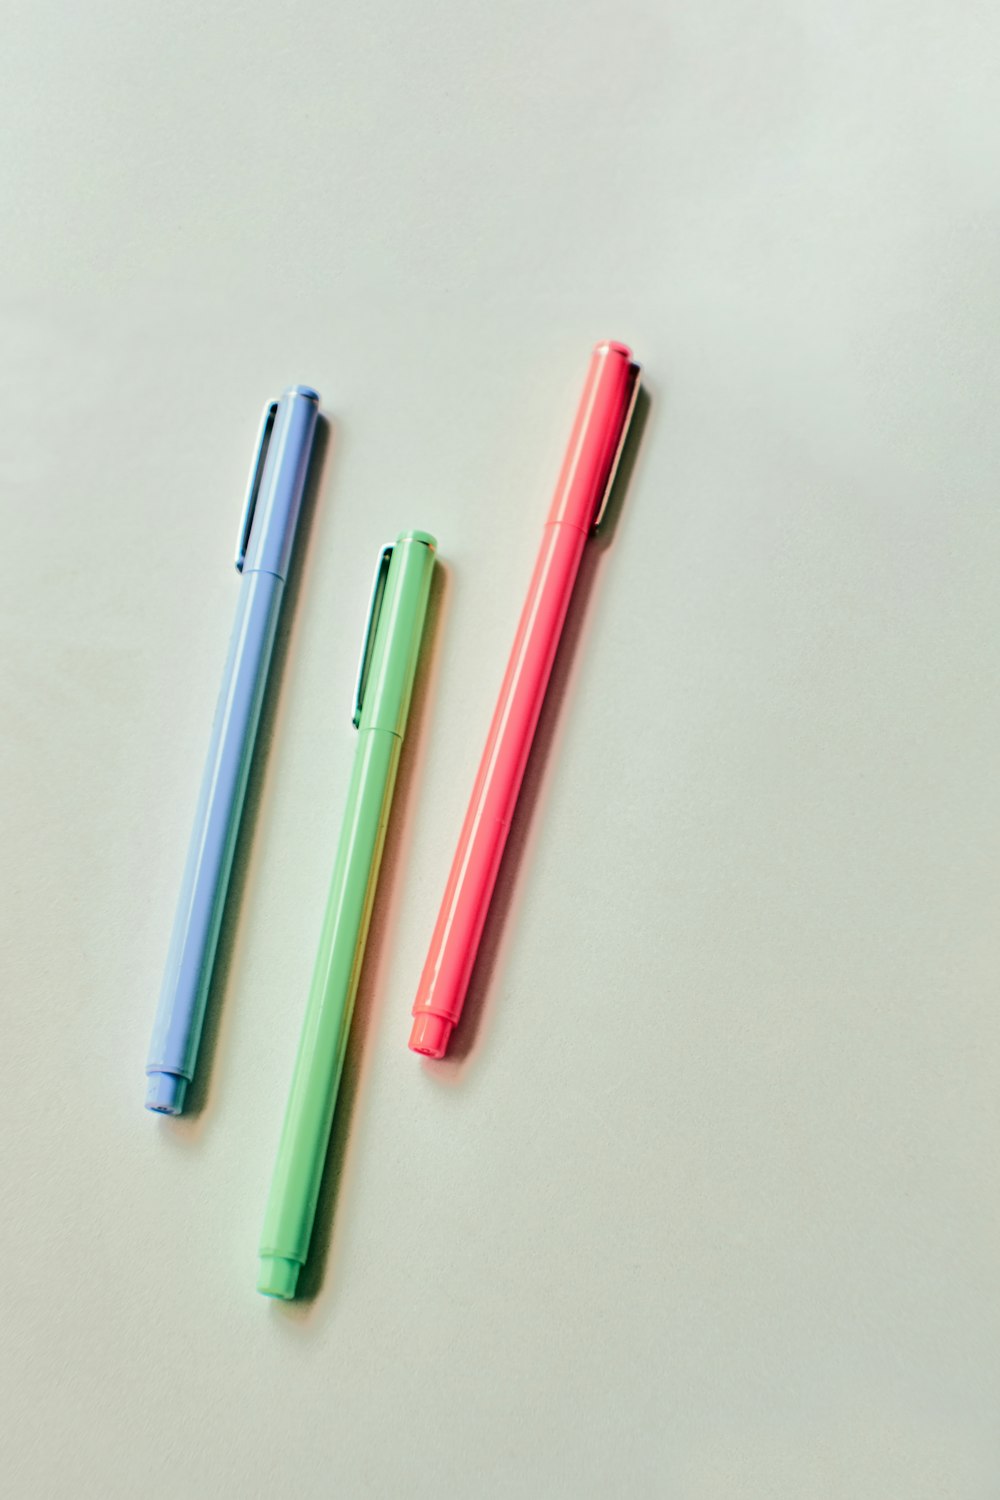 1,030 Coloured Pens Stock Photos - Free & Royalty-Free Stock